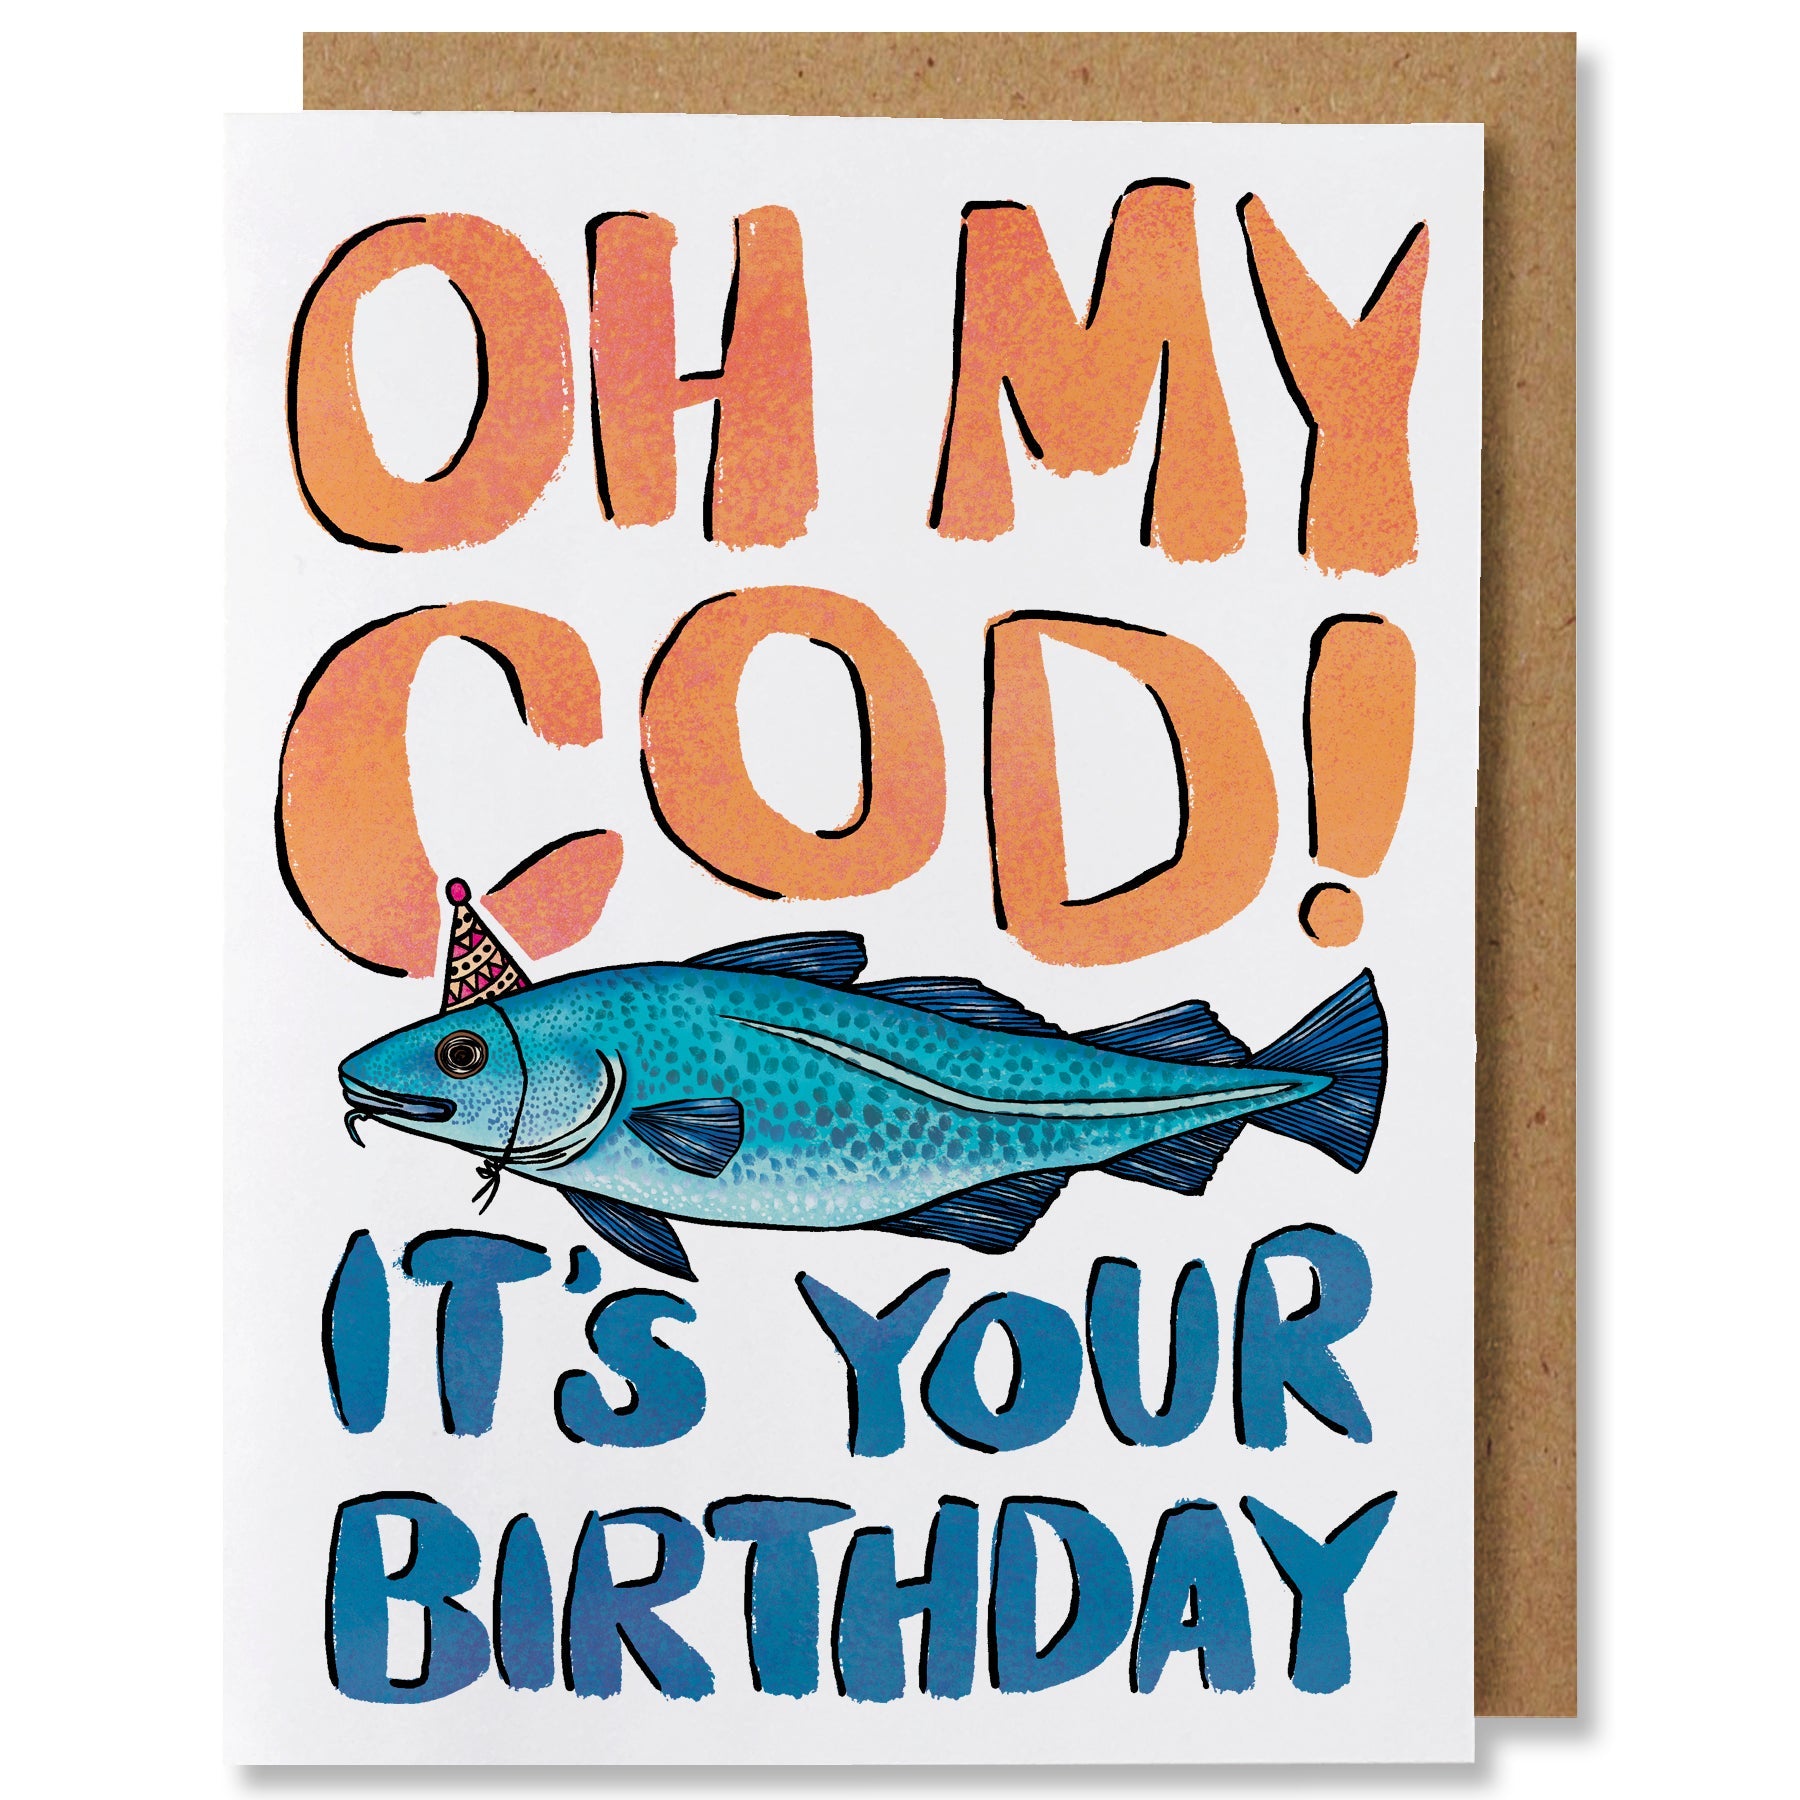  Ulbeelol Cod Fish Themed Funny Birthday Card - GOT YOU A  BIRTHDAY COD, Happy Birthday Card : Office Products